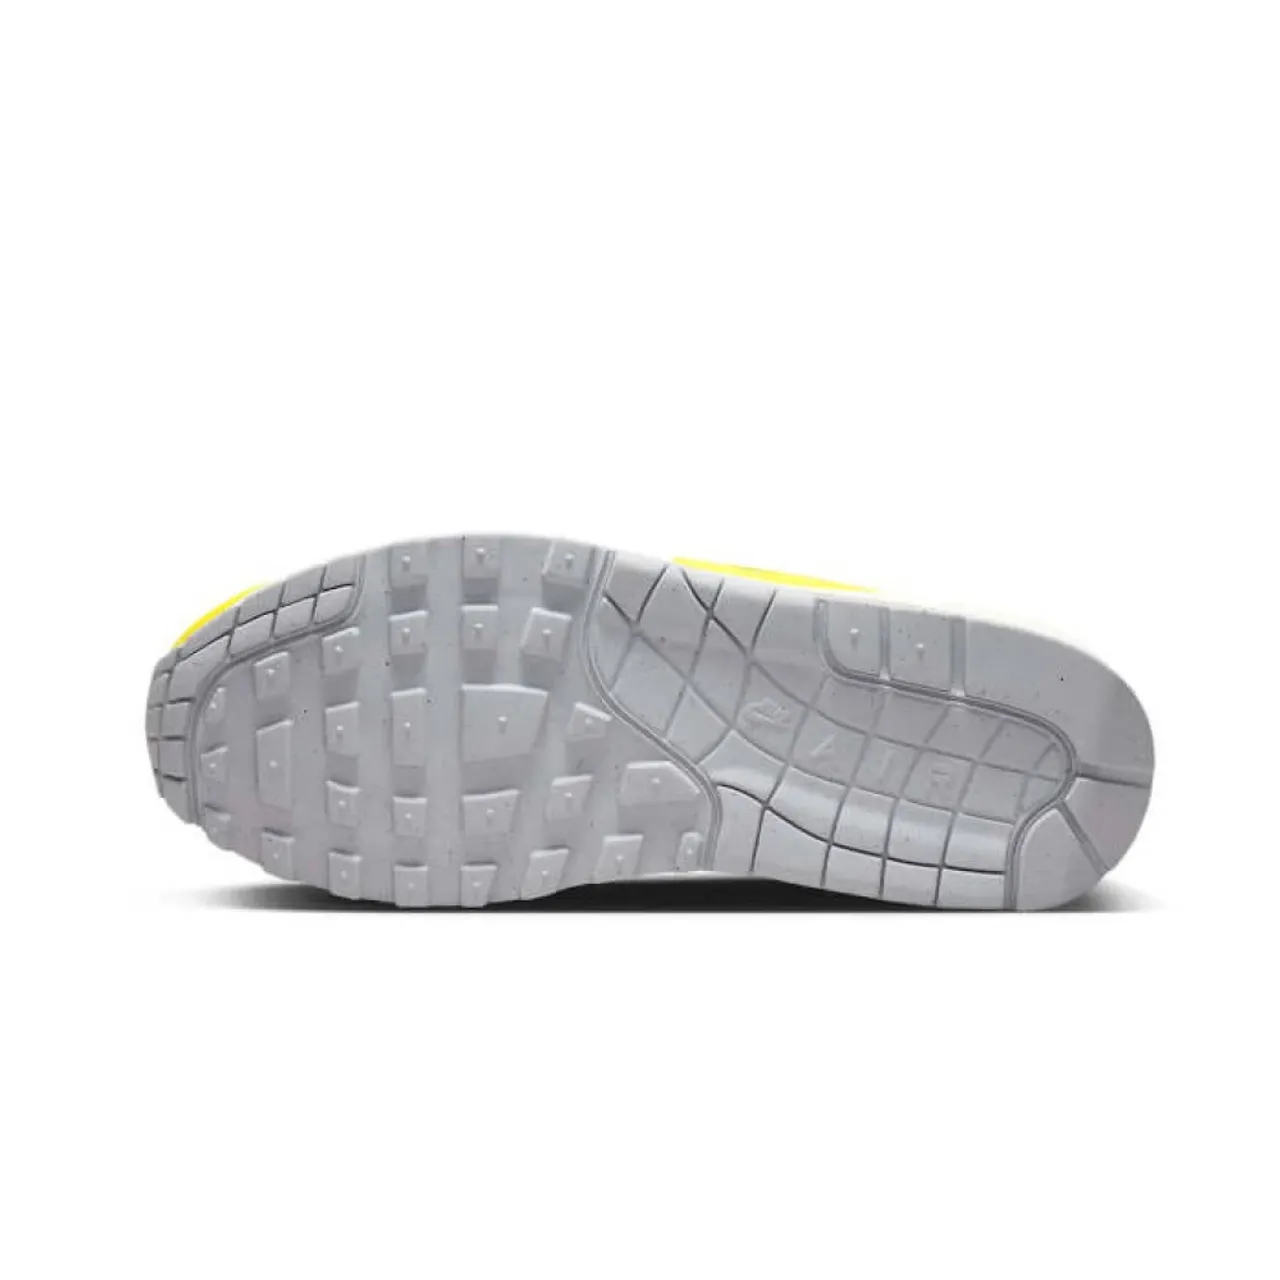 Nike , Air Max 1 Tour Yellow Sneakers ,Yellow male, Sizes: